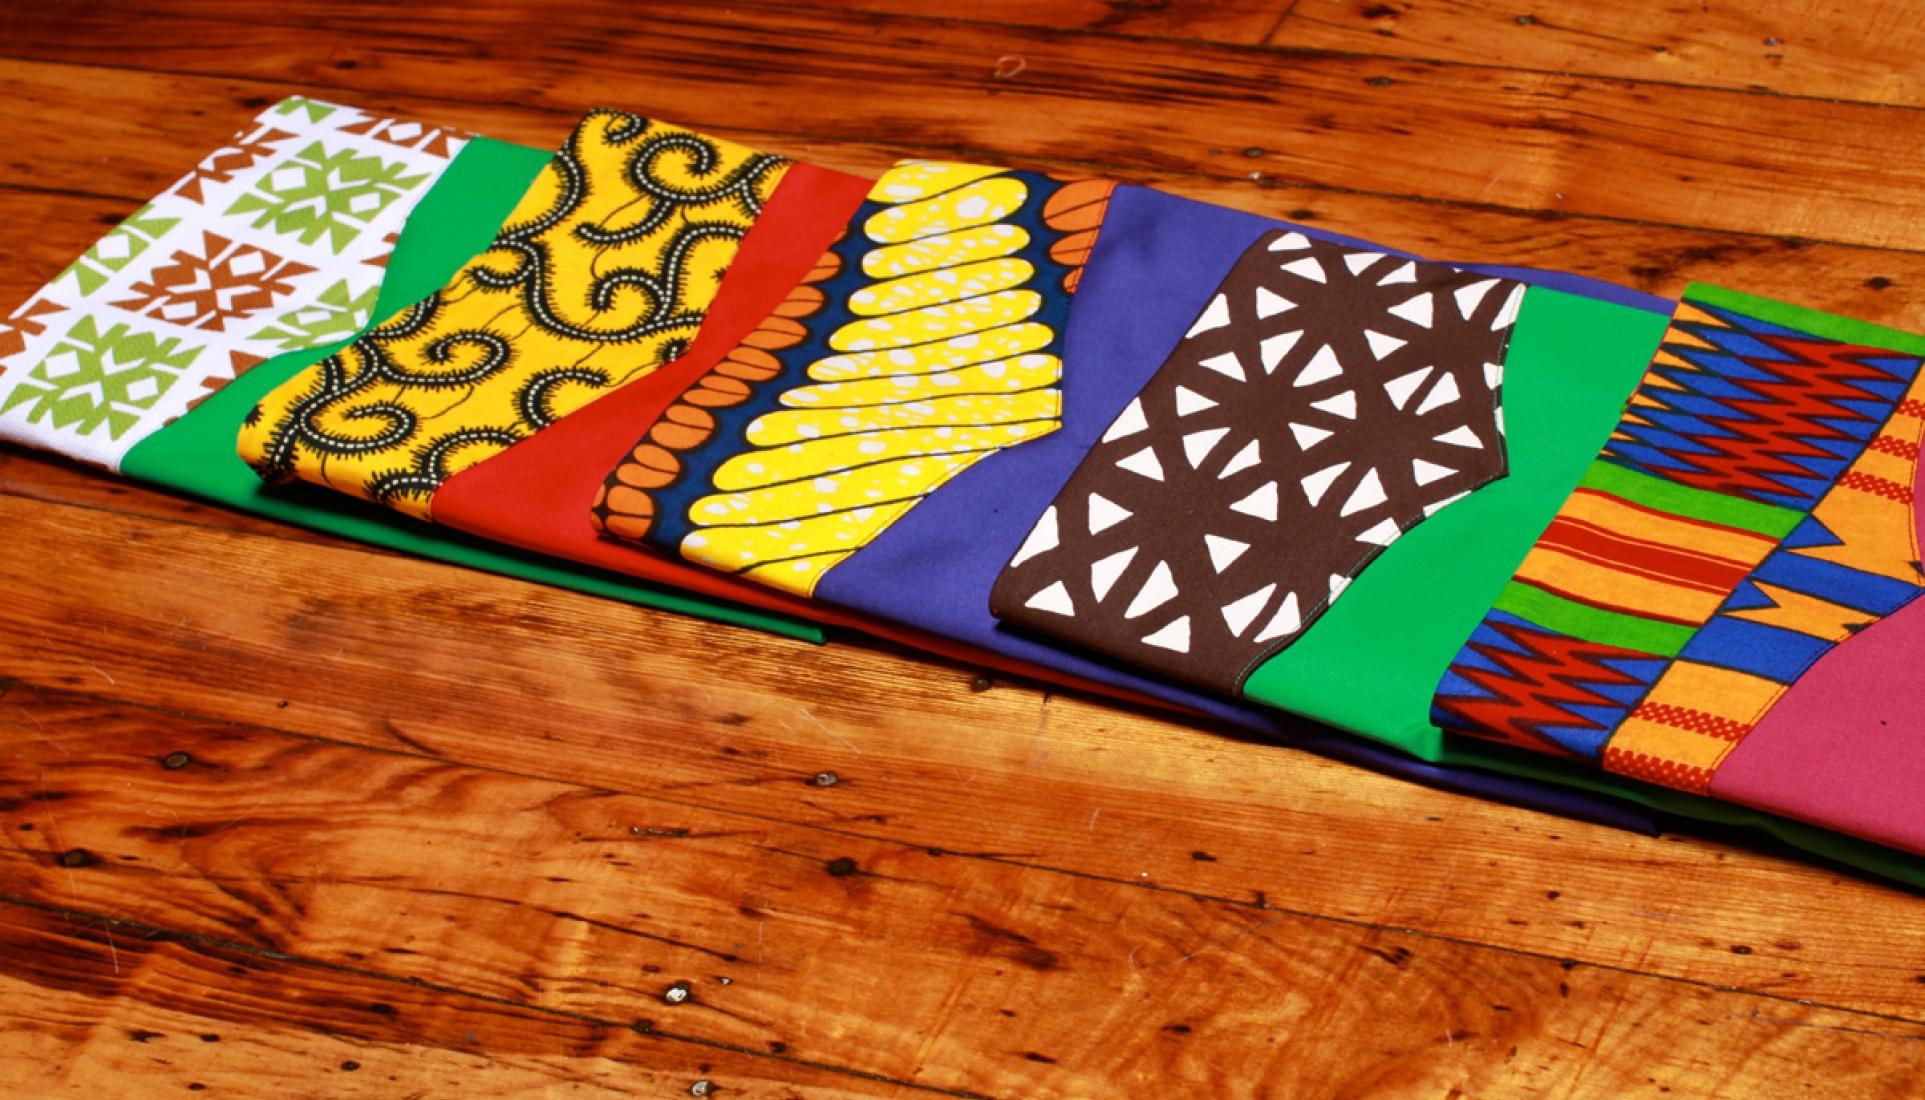 54 Kingdoms Afrikana Delight Skirts All Colors Wood Display